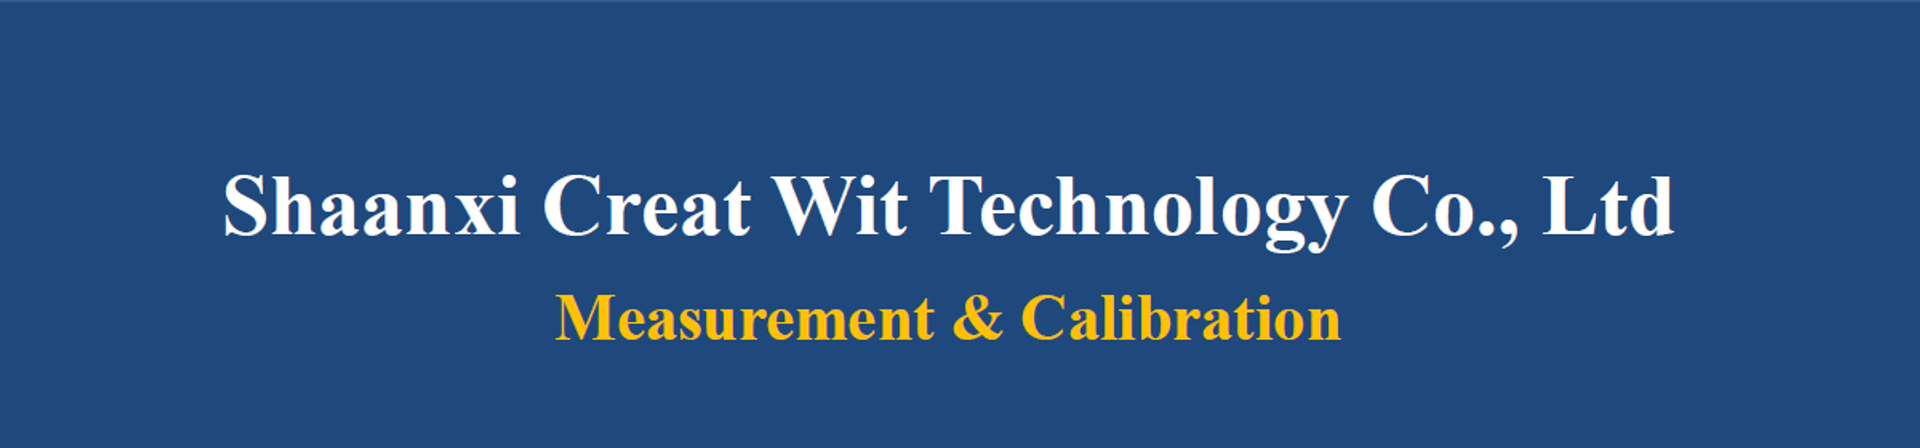 Shaanxi Creat Wit Technology Co. , Ltd. (CW)